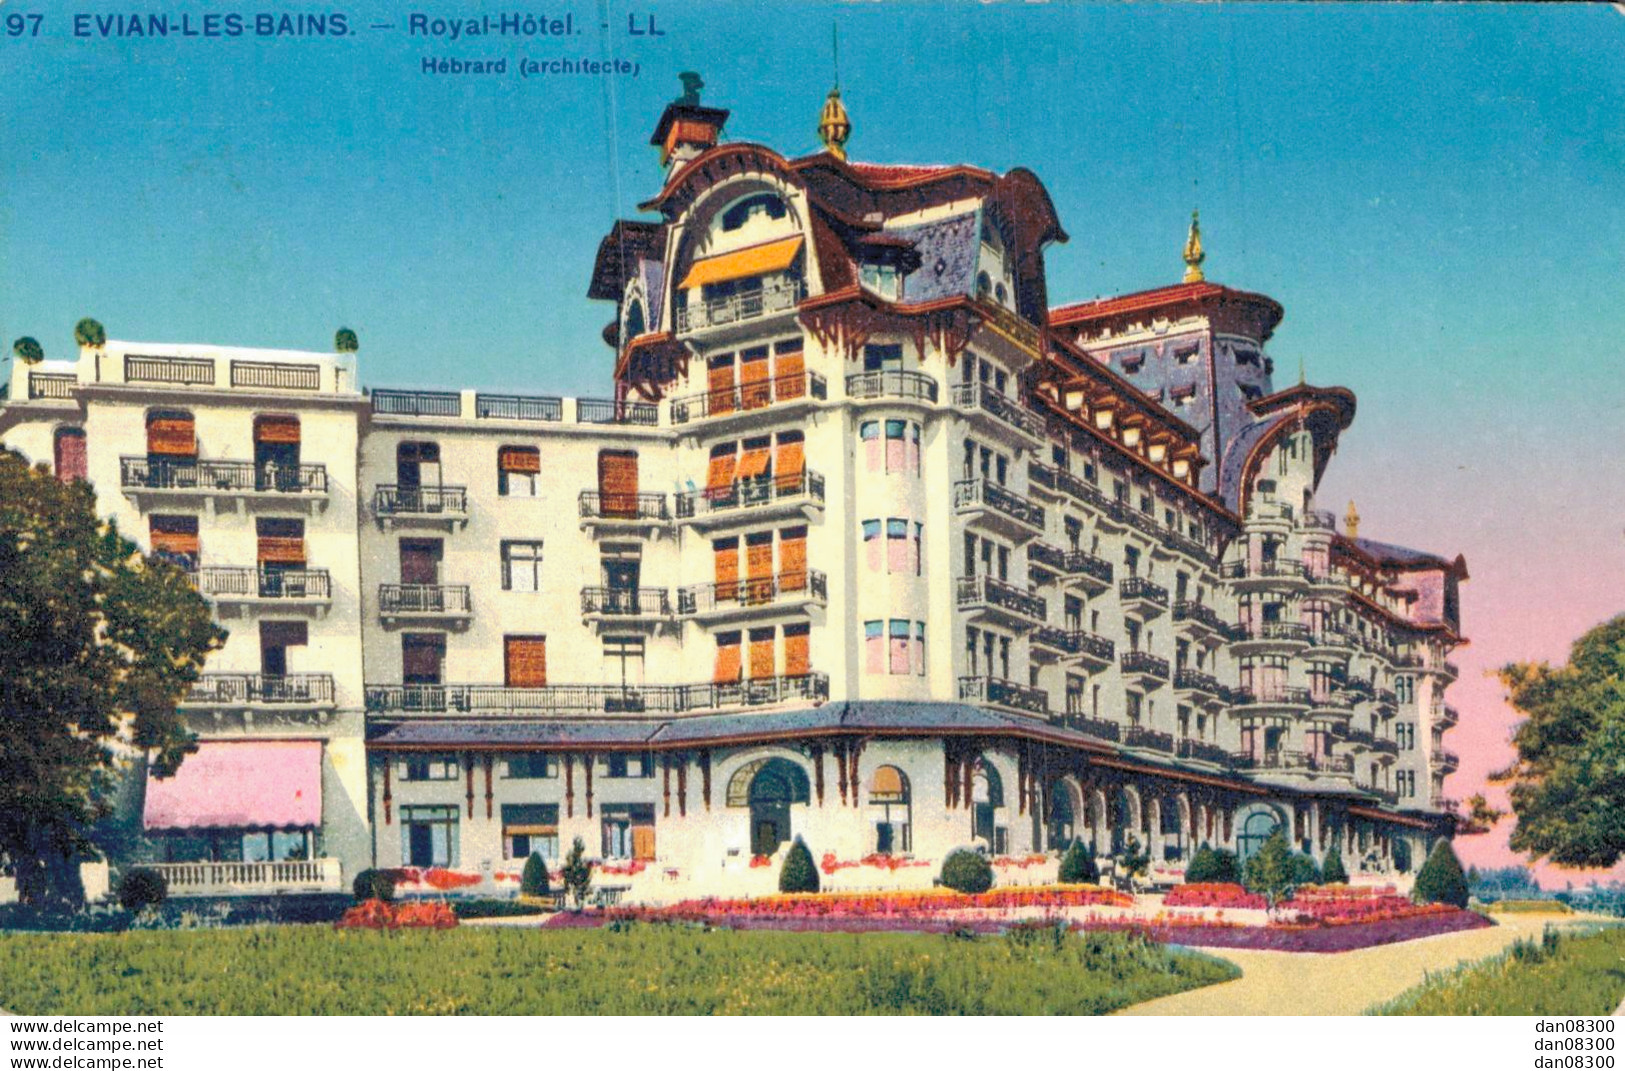 74 EVIAN LES BAINS ROYAL HOTEL - Evian-les-Bains